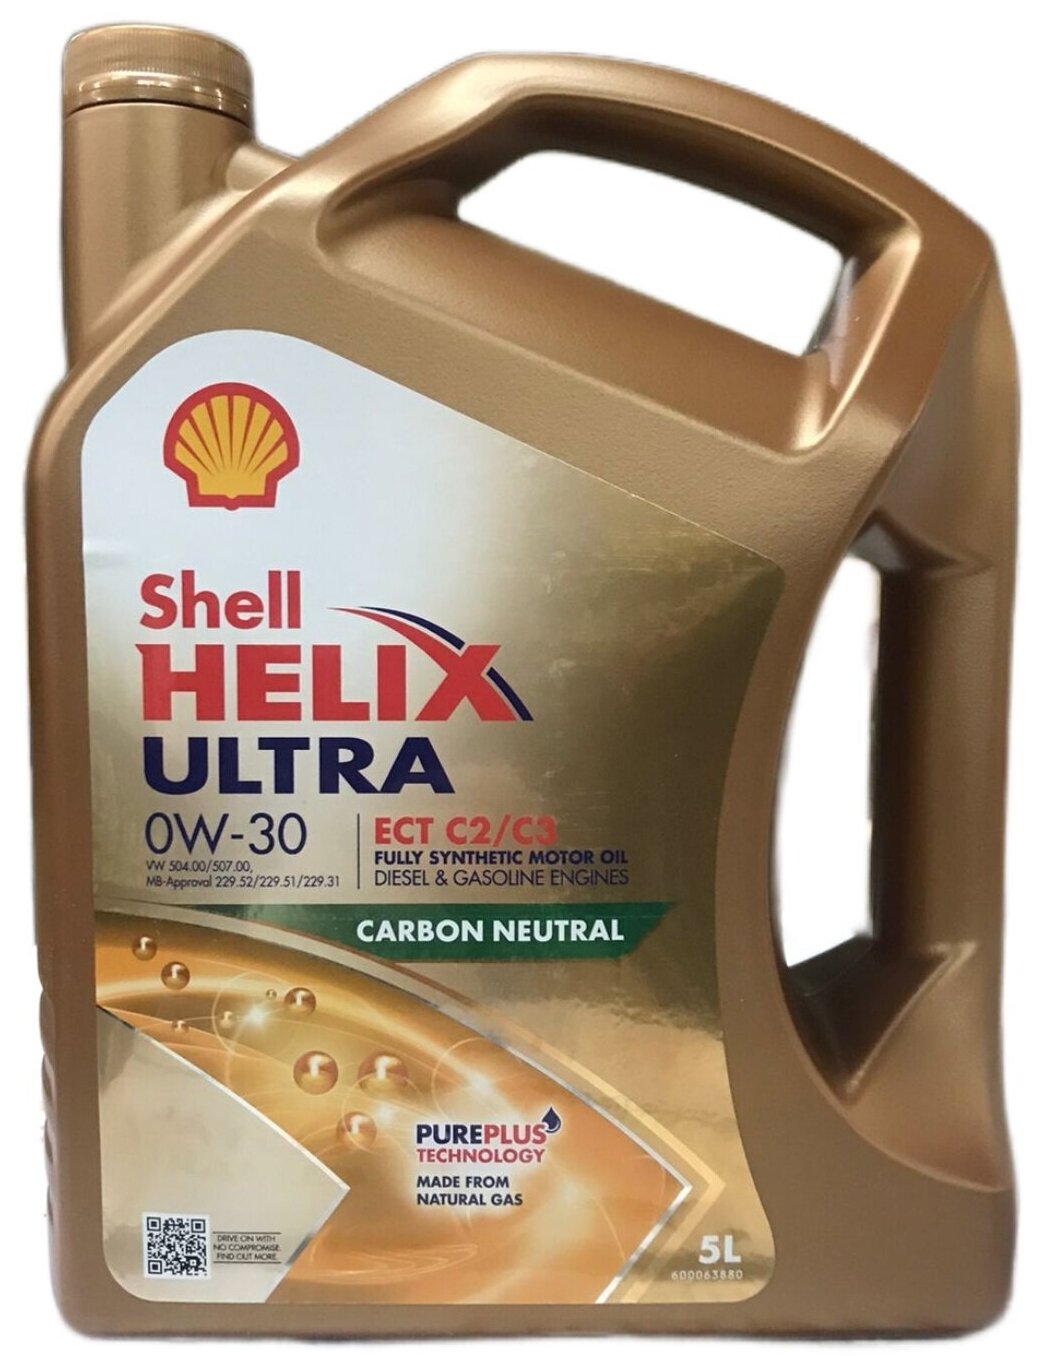 Shell Helix Ultra ECT C2C3 0W30 - характеристики, артикулы, отзывы